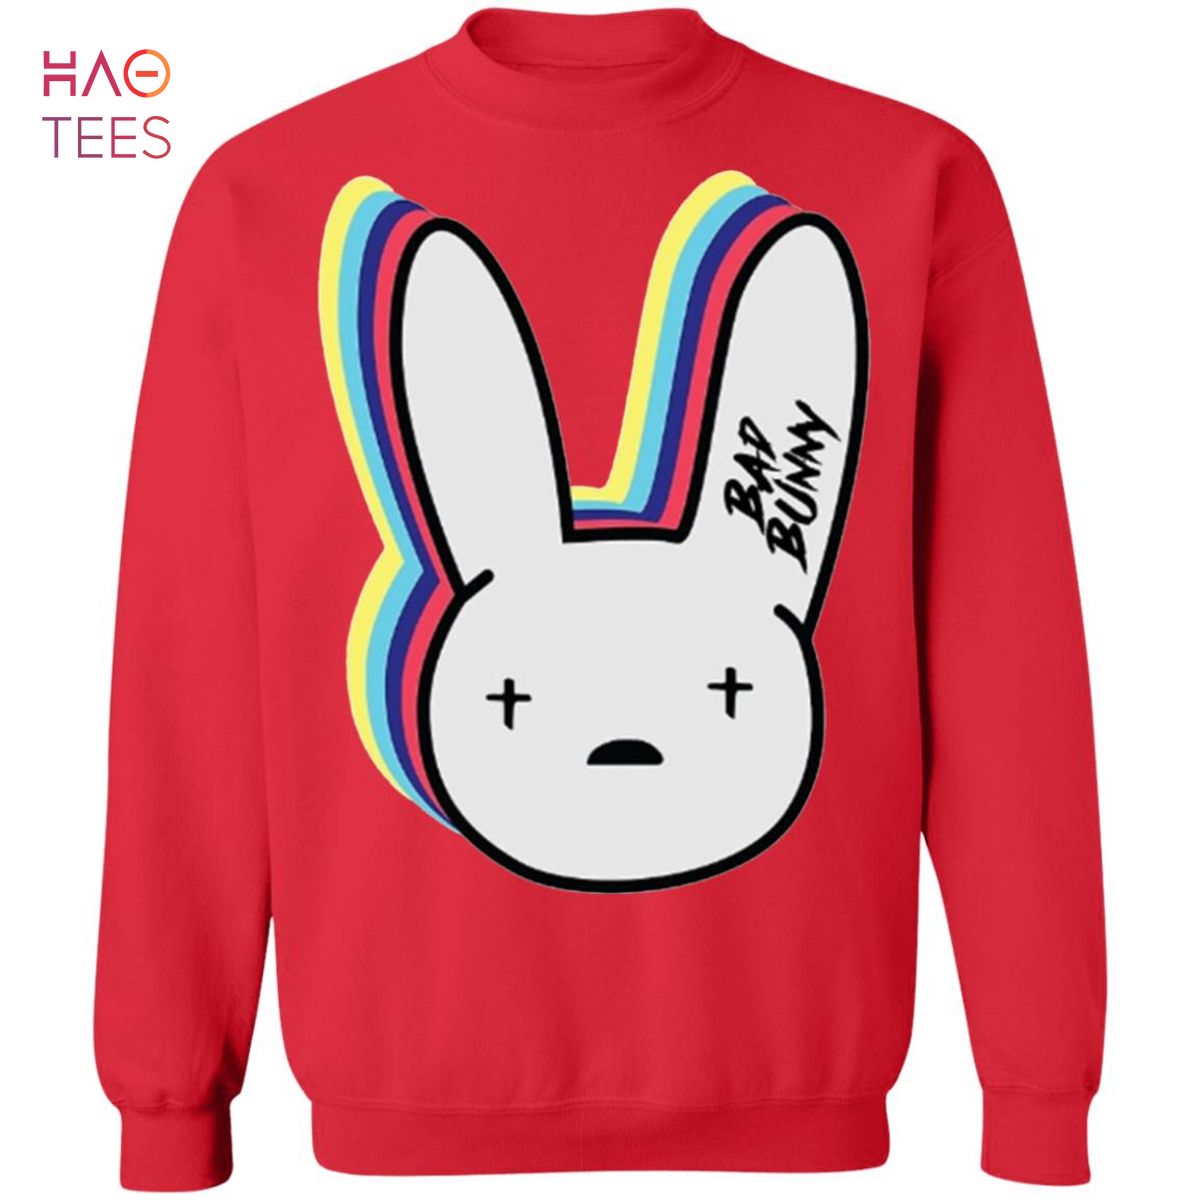 Bad bunny t shirt - Gem